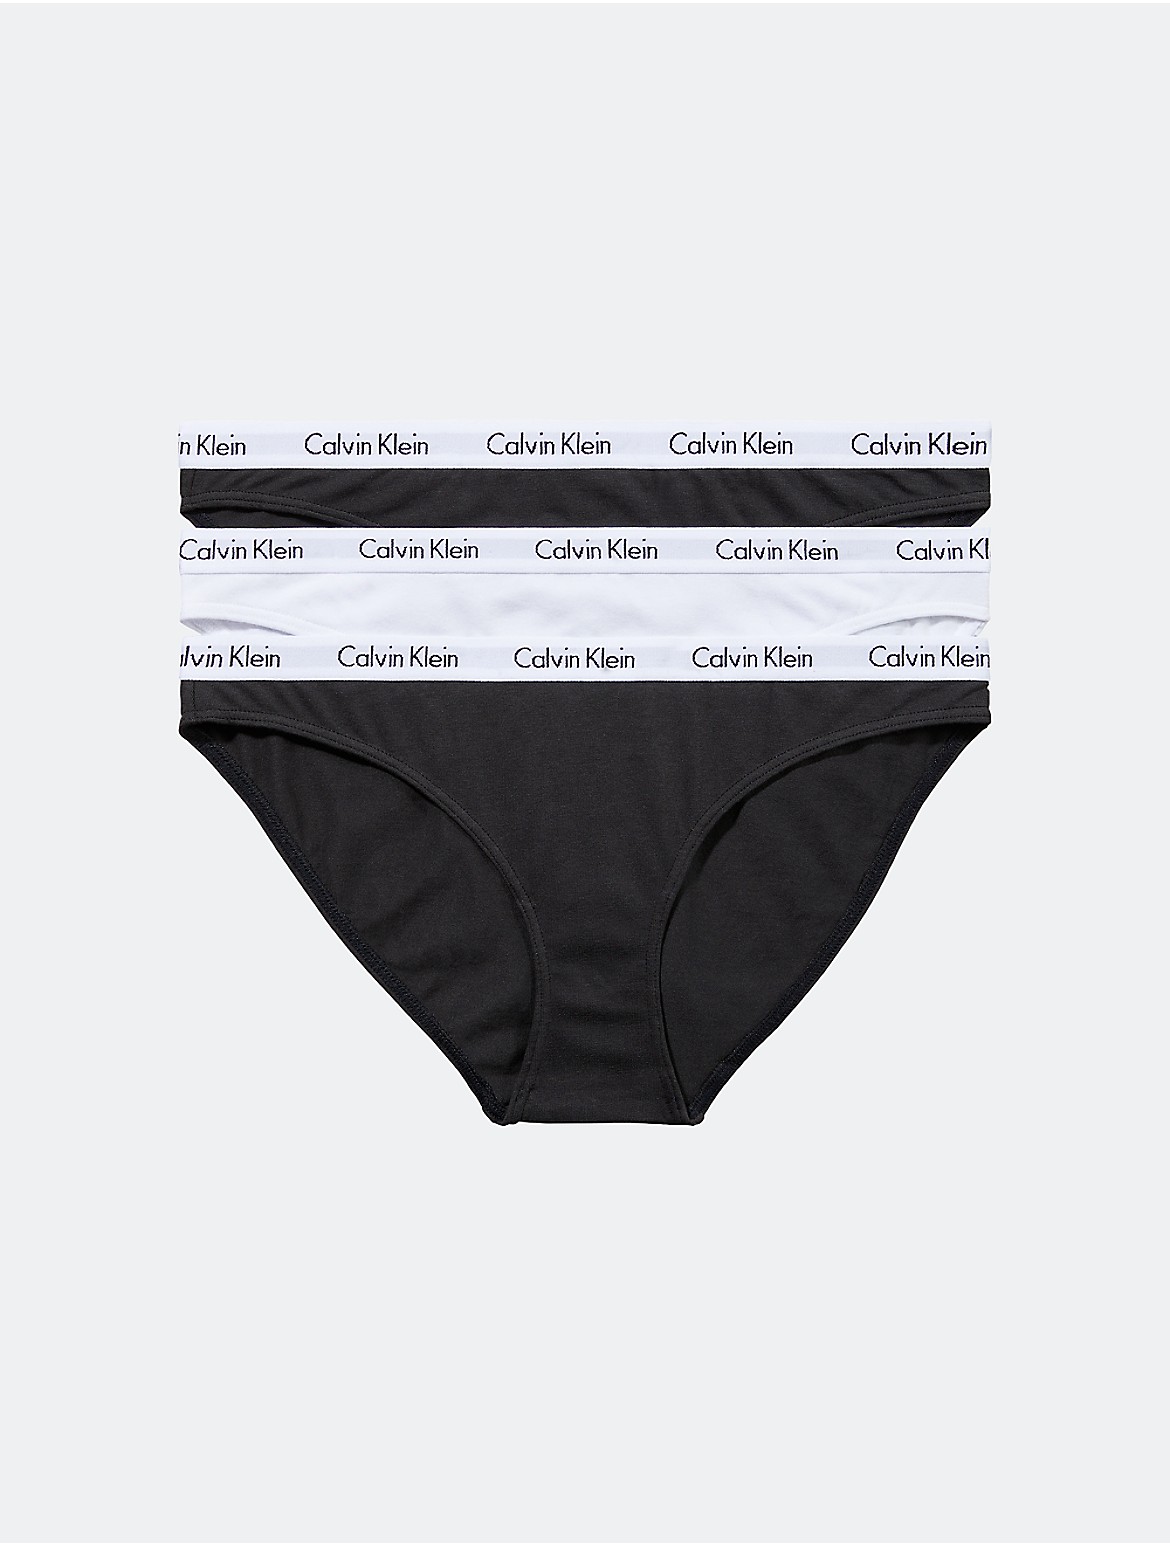 Calvin Klein Women's Carousel Logo Cotton 3-Pack Bikini - Multi - S